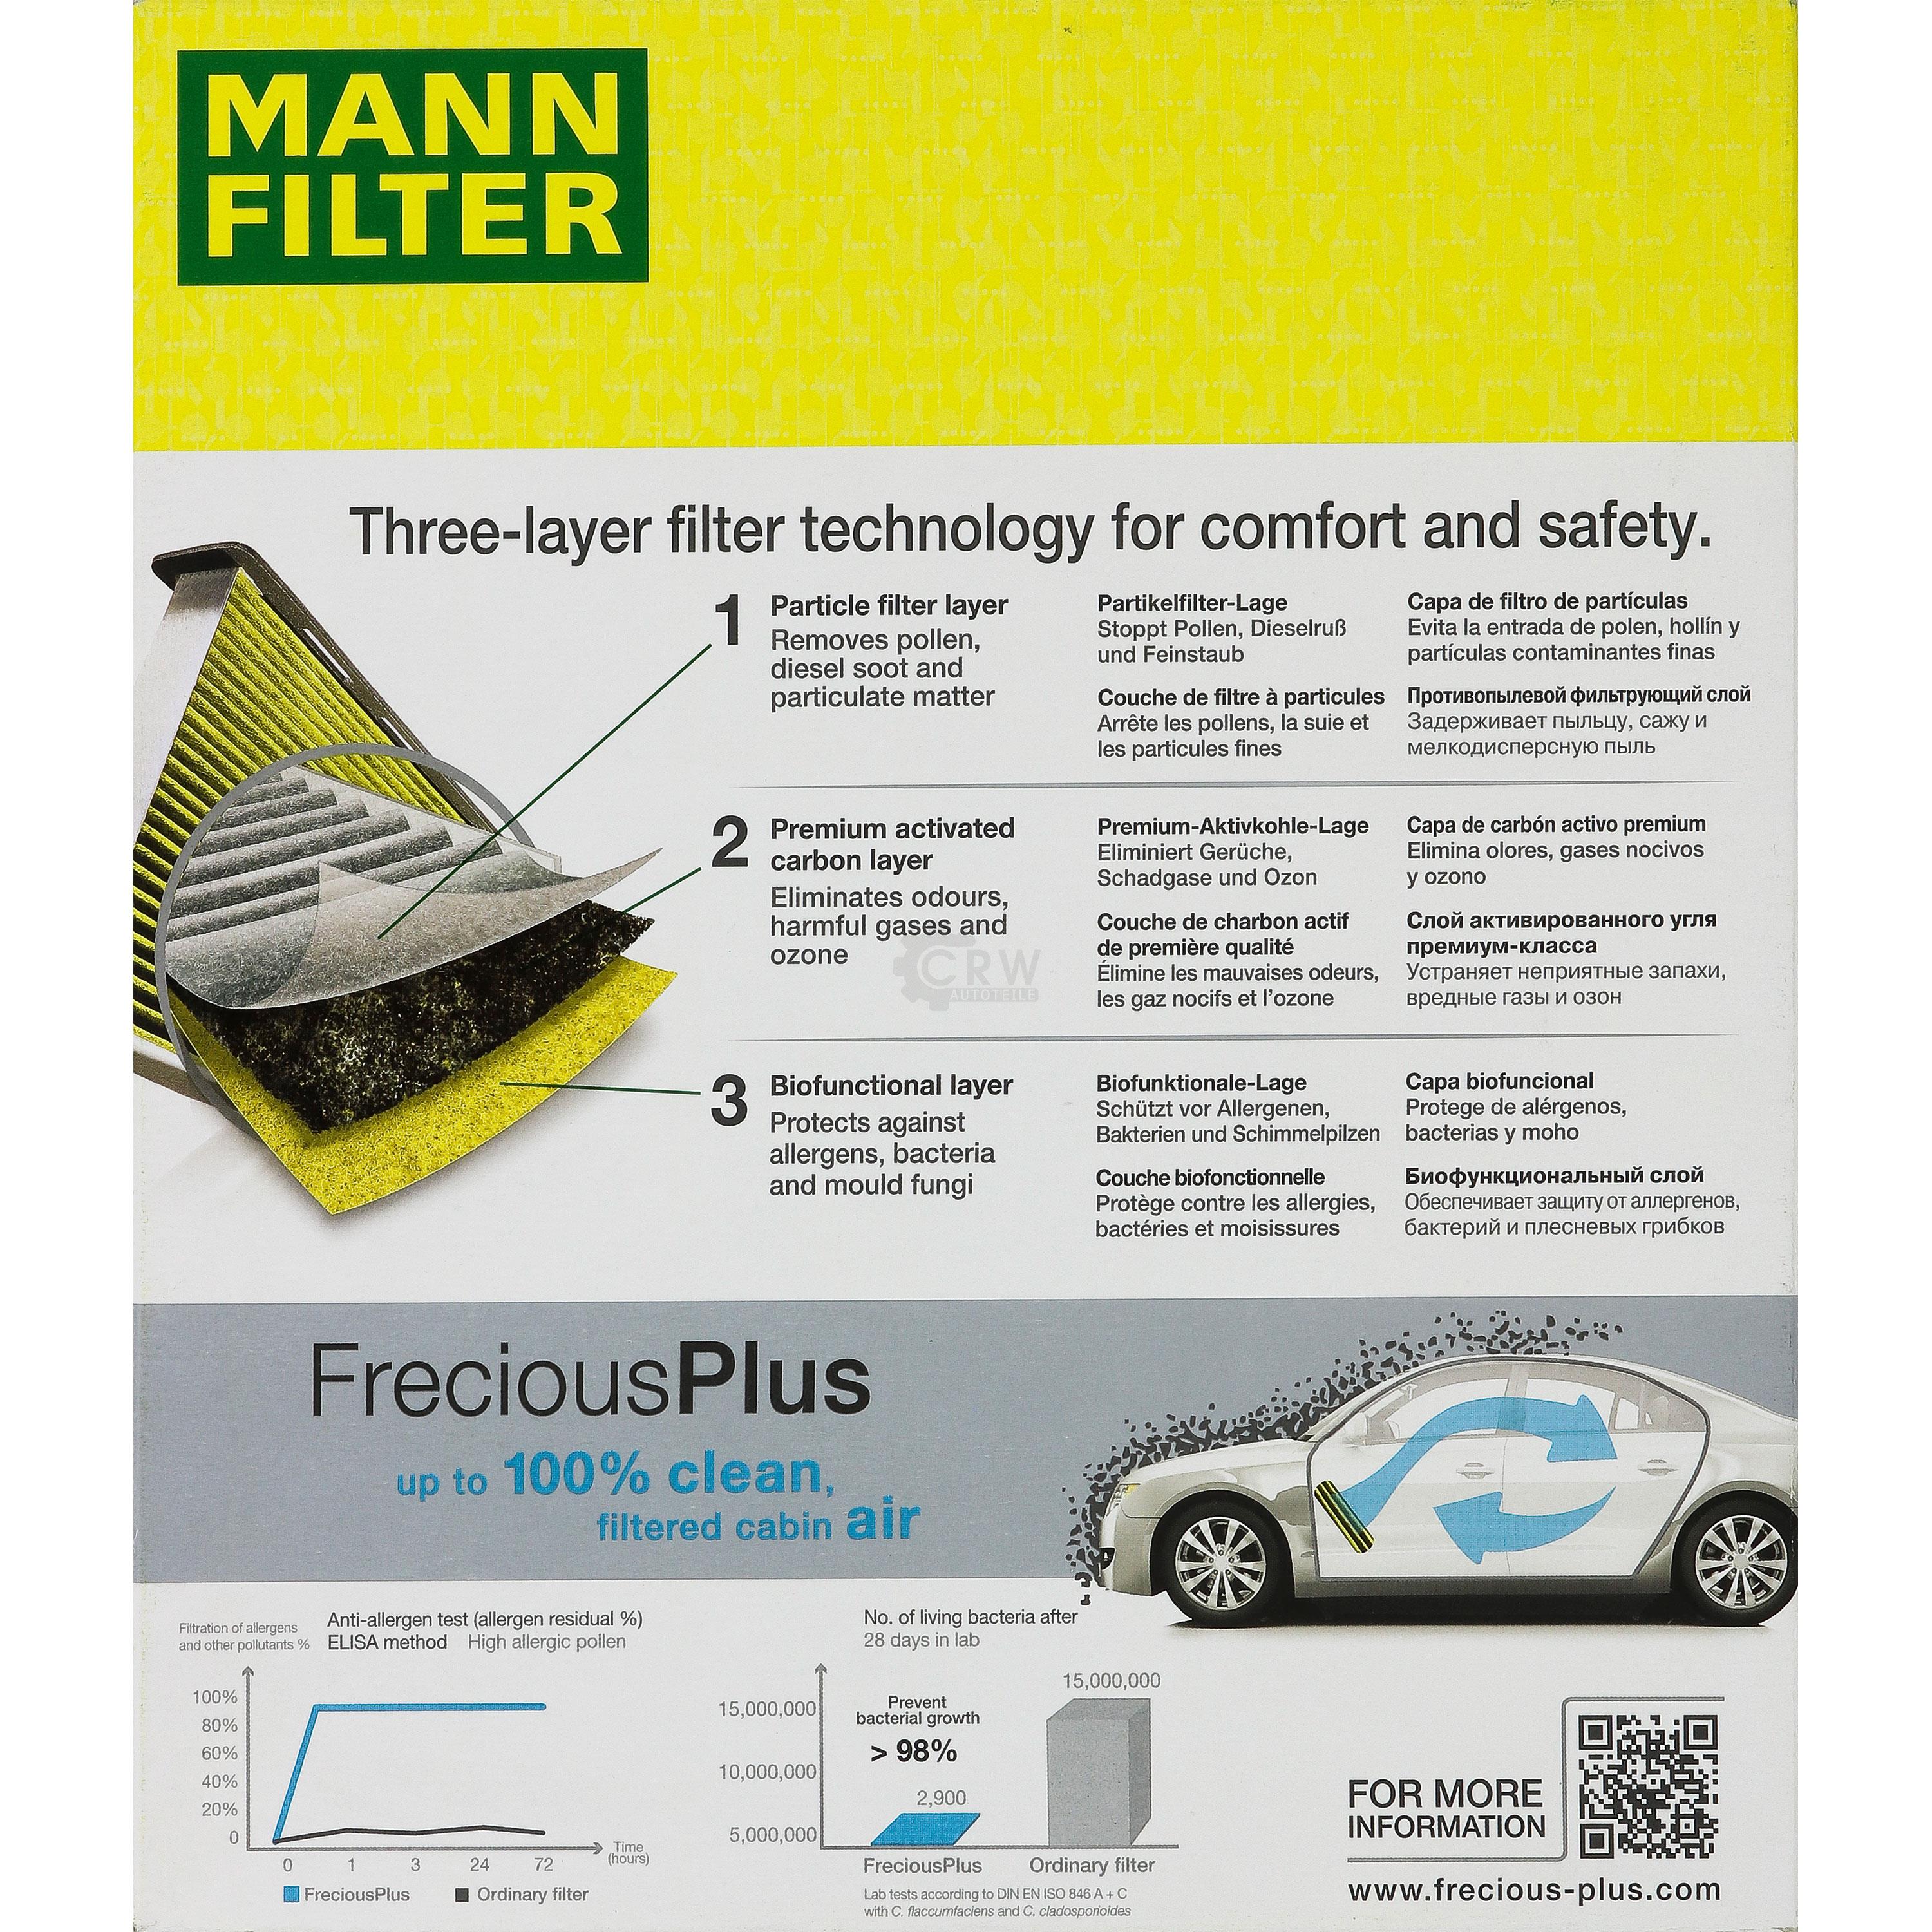 MANN-Filter Innenraumfilter Biofunctional für Allergiker FP 2440